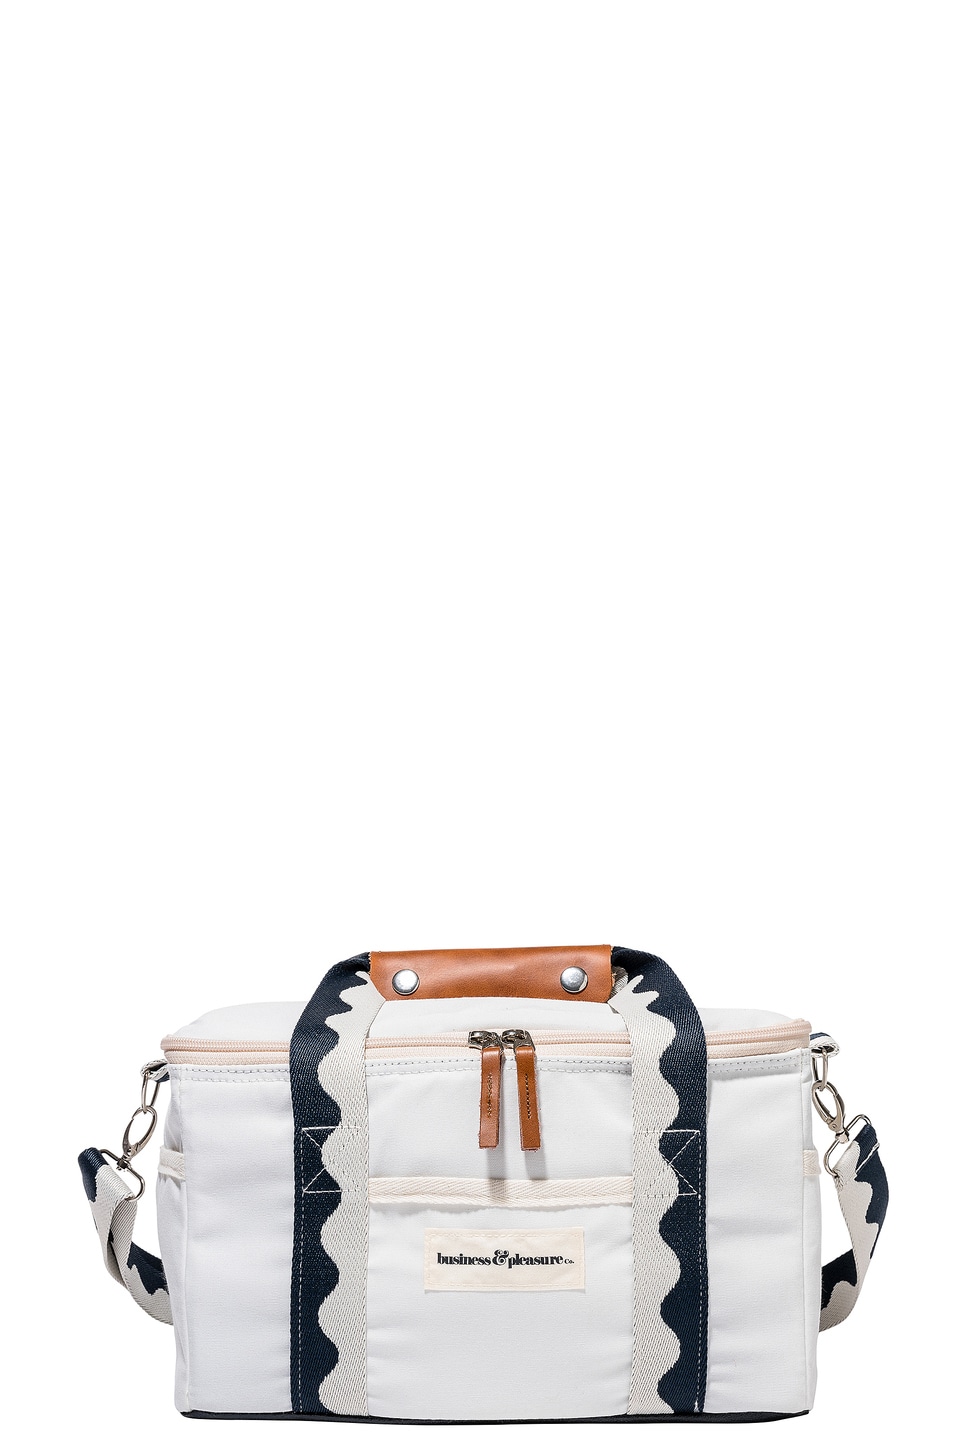 Image 1 of business & pleasure co. Premium Cooler Bag in Riviera White